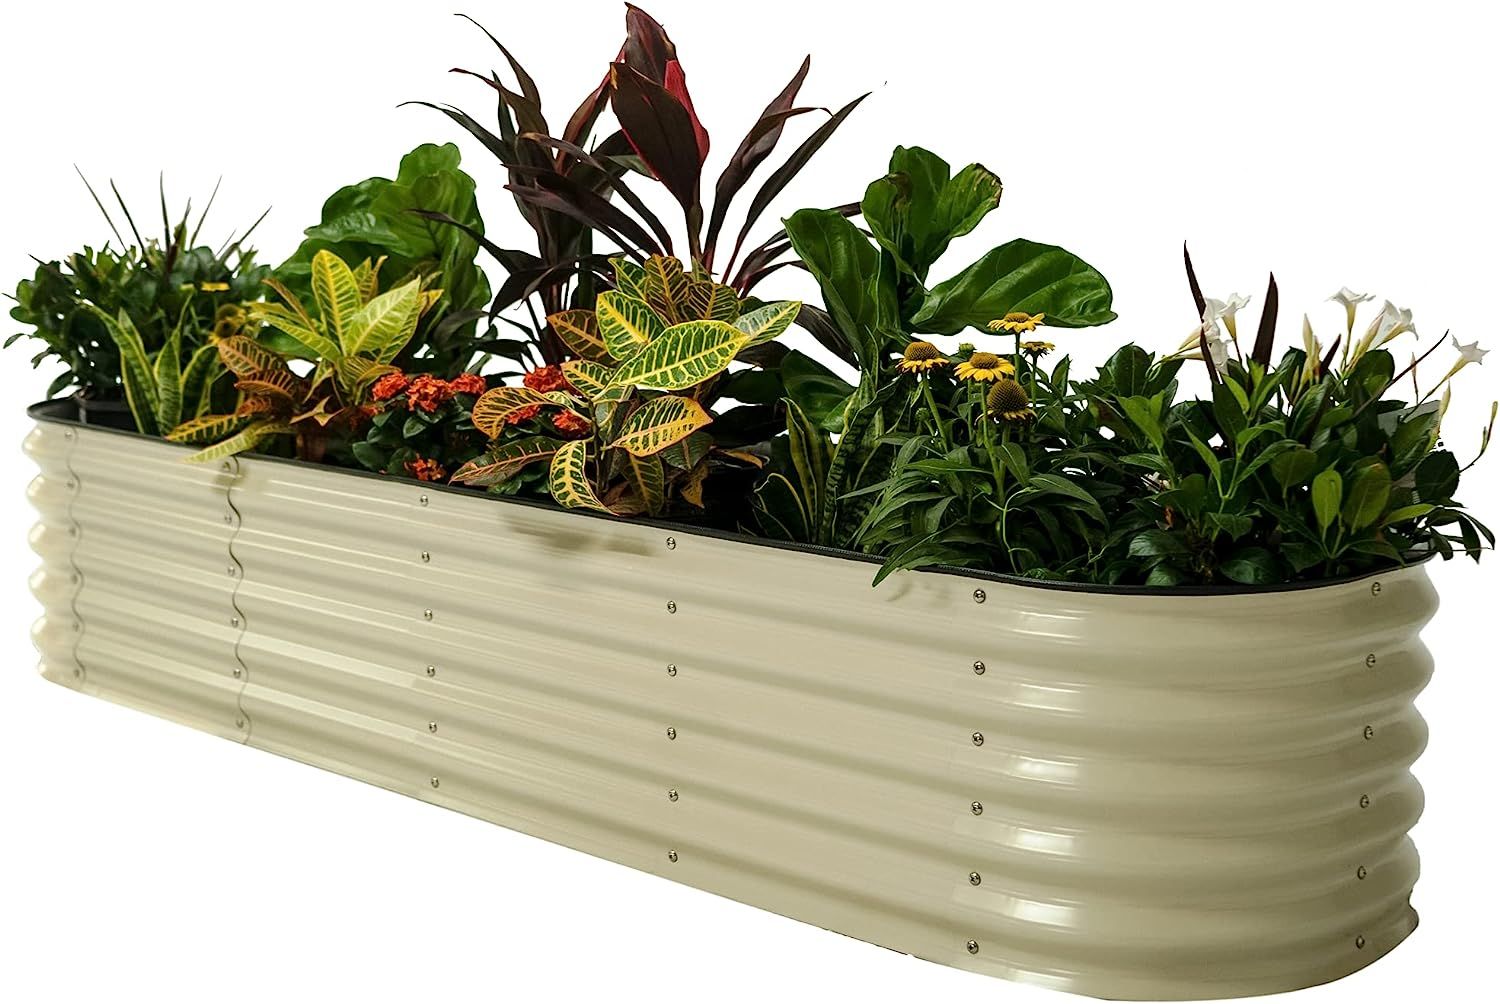 Vego garden Raised Garden Bed Kits, 17" Tall 9 in 1 8ft X 2ft Metal Raised Planter Bed for Vegeta... | Amazon (US)